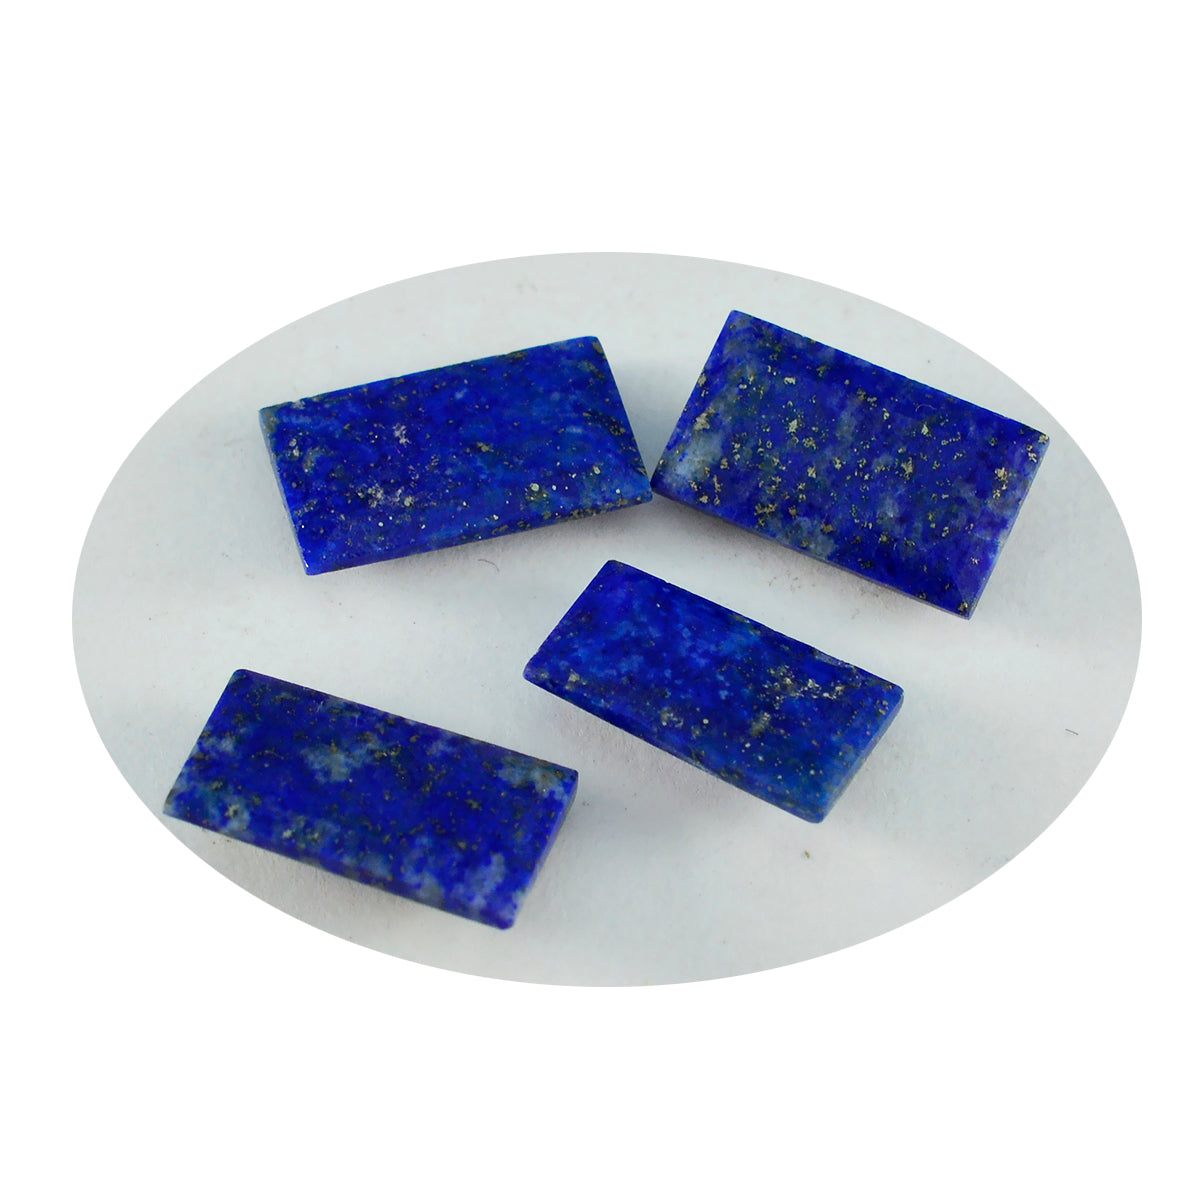 Riyogems, 1 pieza, lapislázuli azul auténtico facetado, forma de baguette de 5x10mm, Gema de calidad fantástica